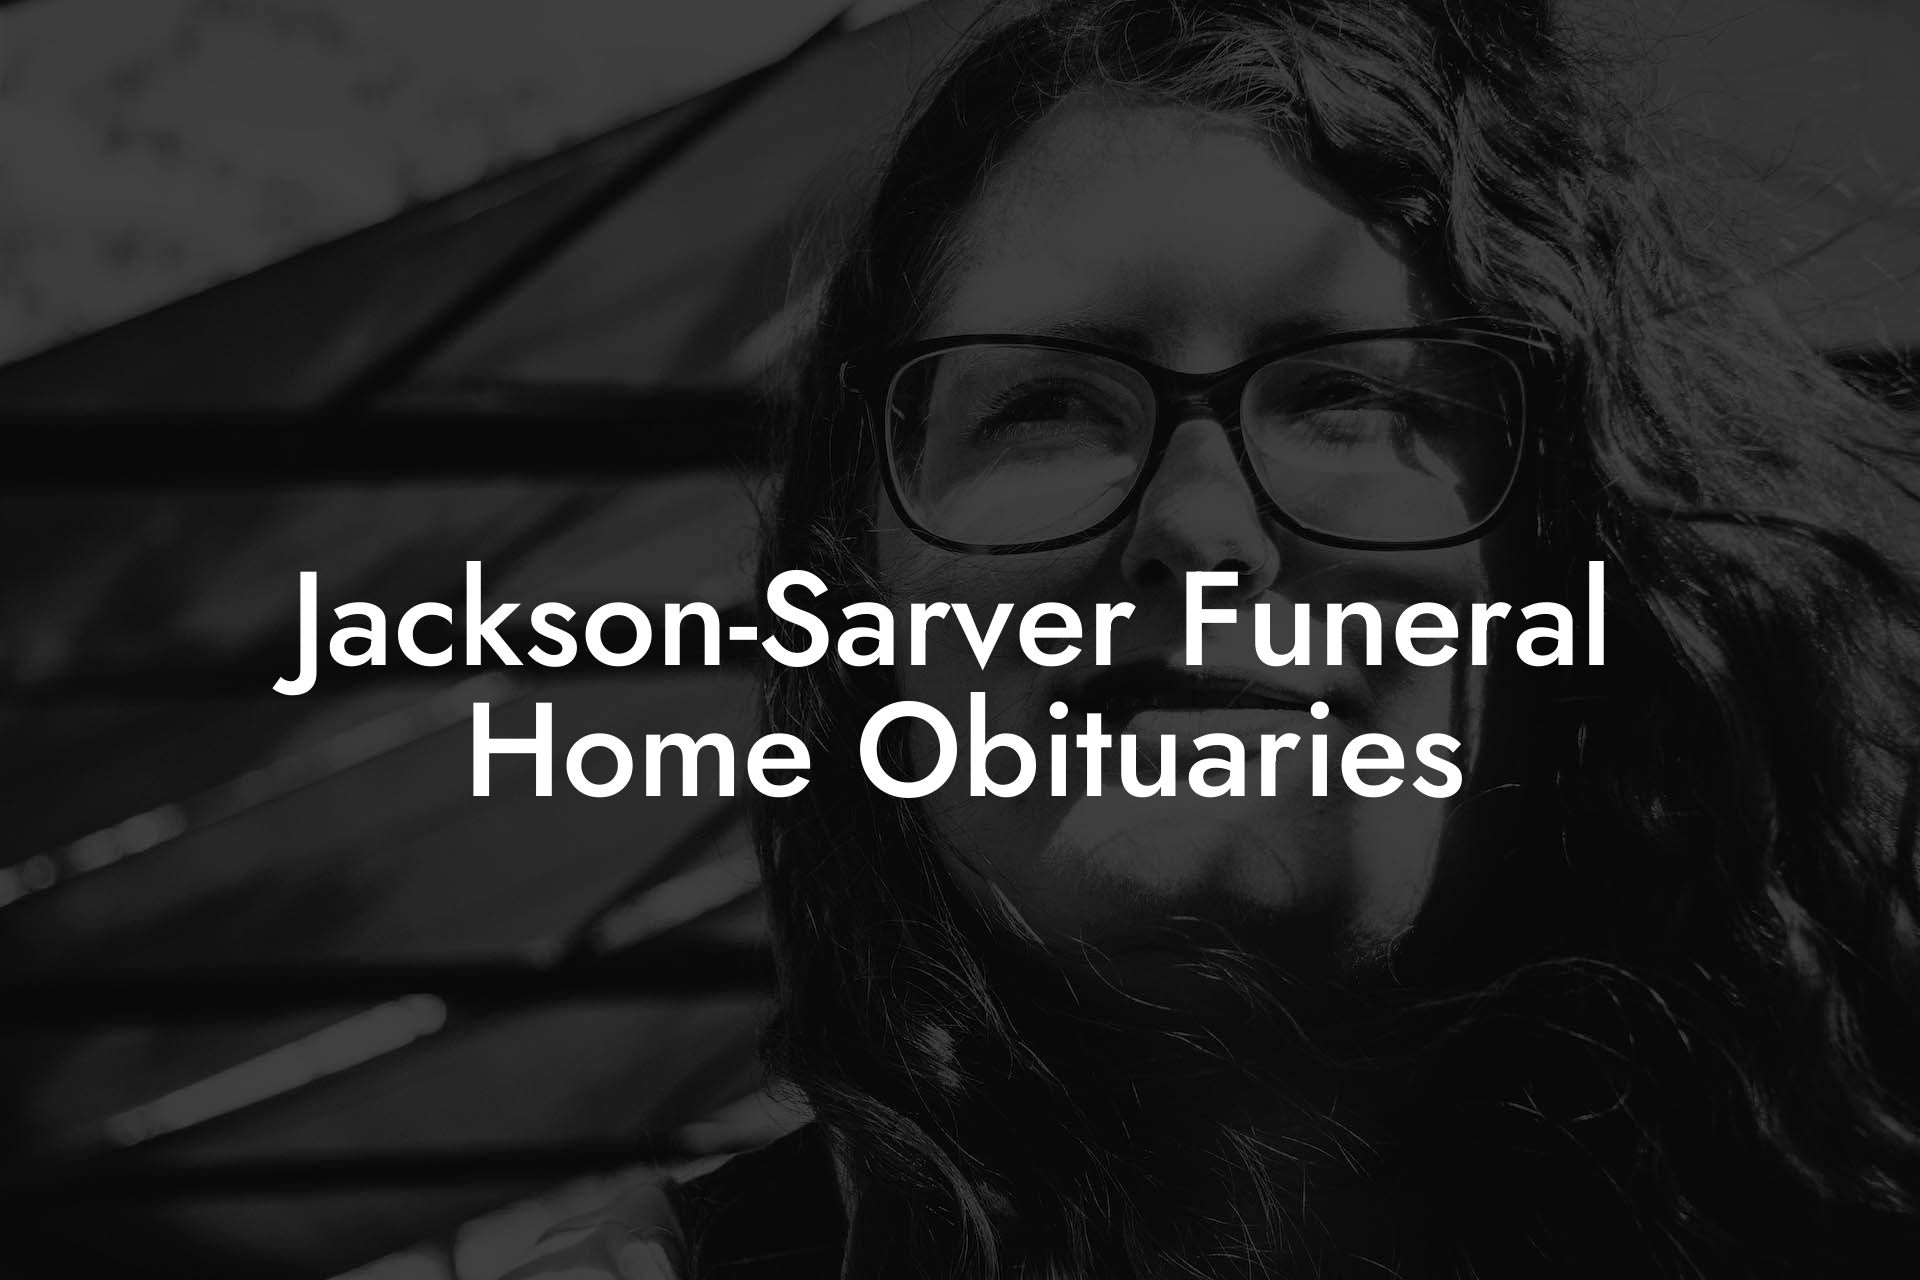 Jackson-Sarver Funeral Home Obituaries